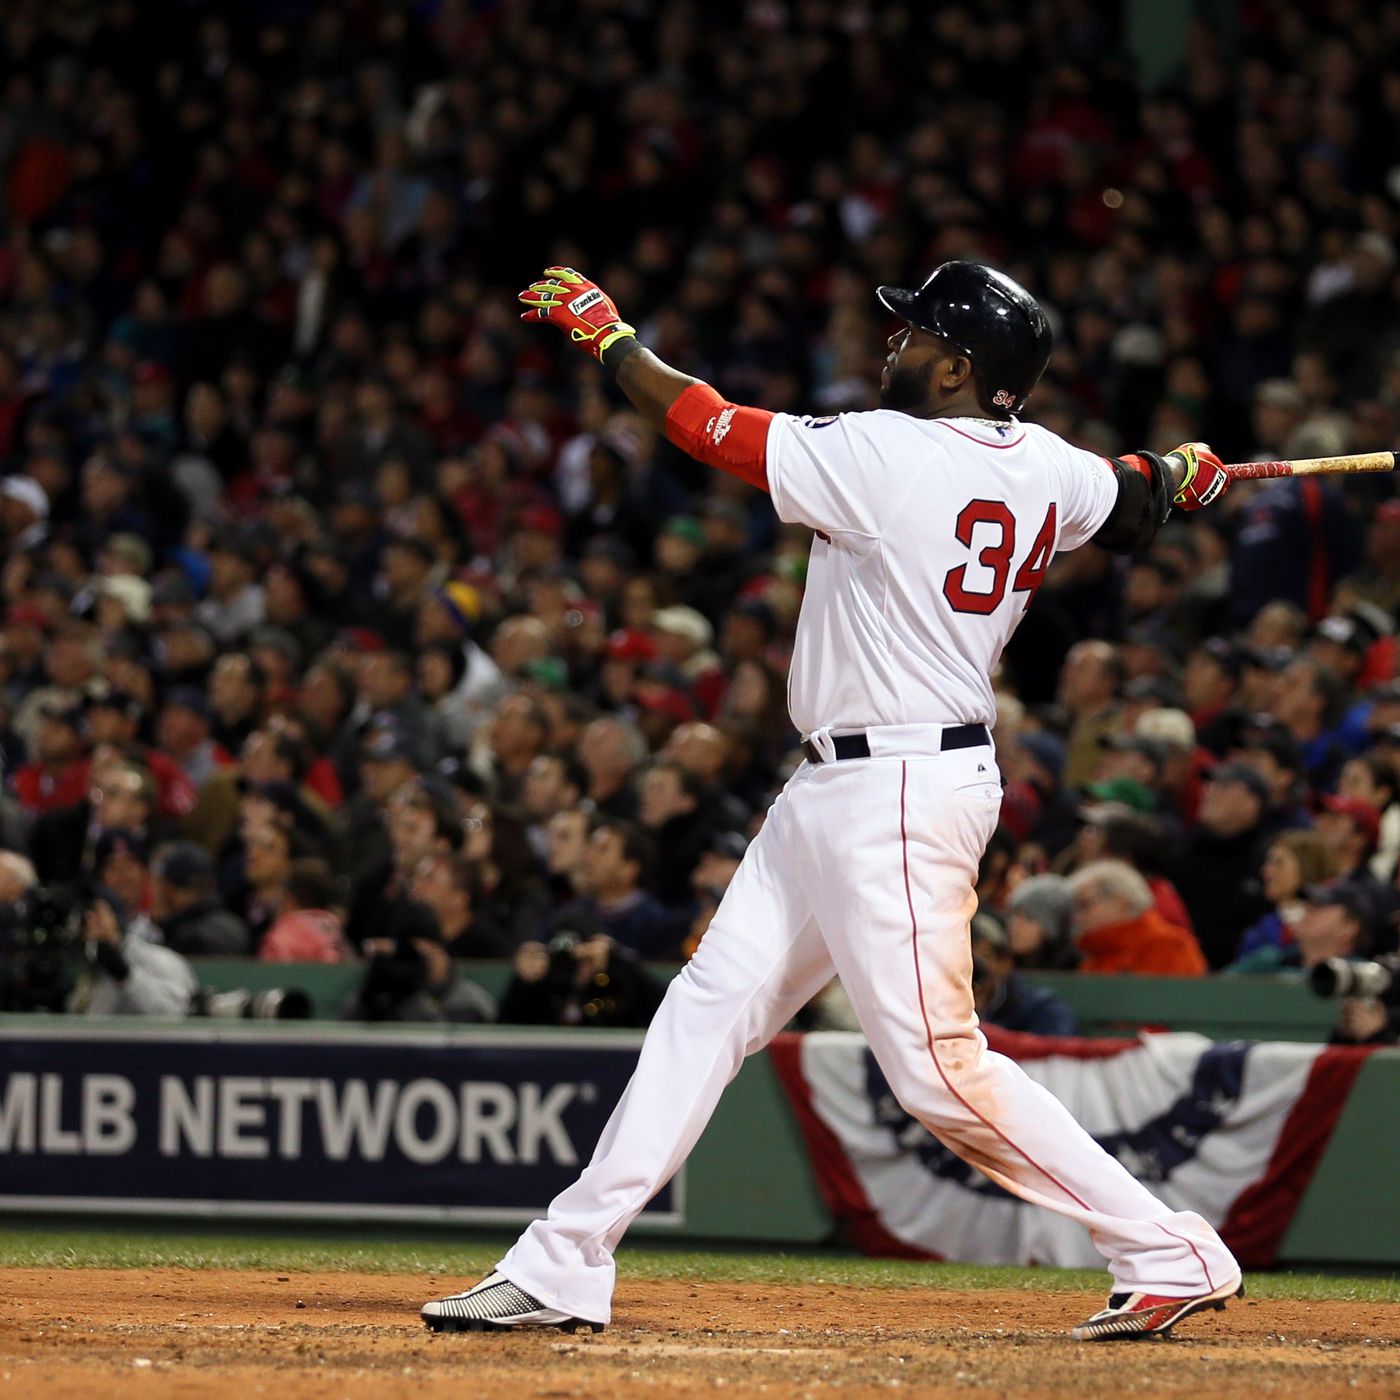 inch Knoglemarv fodspor 2013 World Series: Red Sox blast Cardinals in Game 1 - SBNation.com